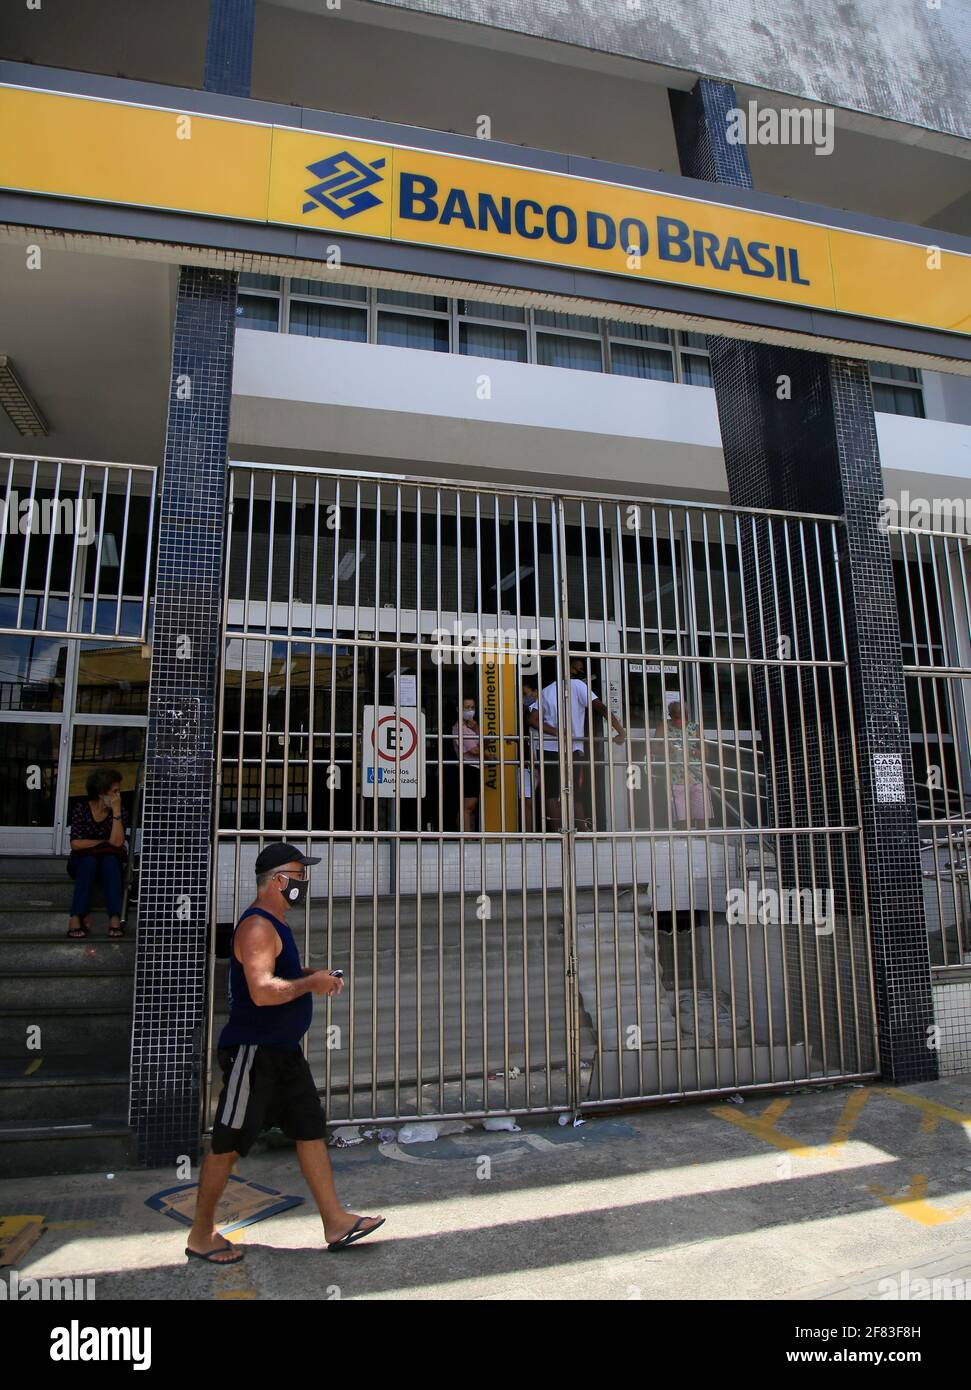 https://c8.alamy.com/comp/2F83F8H/salvador-bahia-brazil-january-27-2021-facade-of-the-banco-do-brasil-branch-in-the-liberdade-neighborhood-in-the-city-of-salvador-local-ca-2F83F8H.jpg